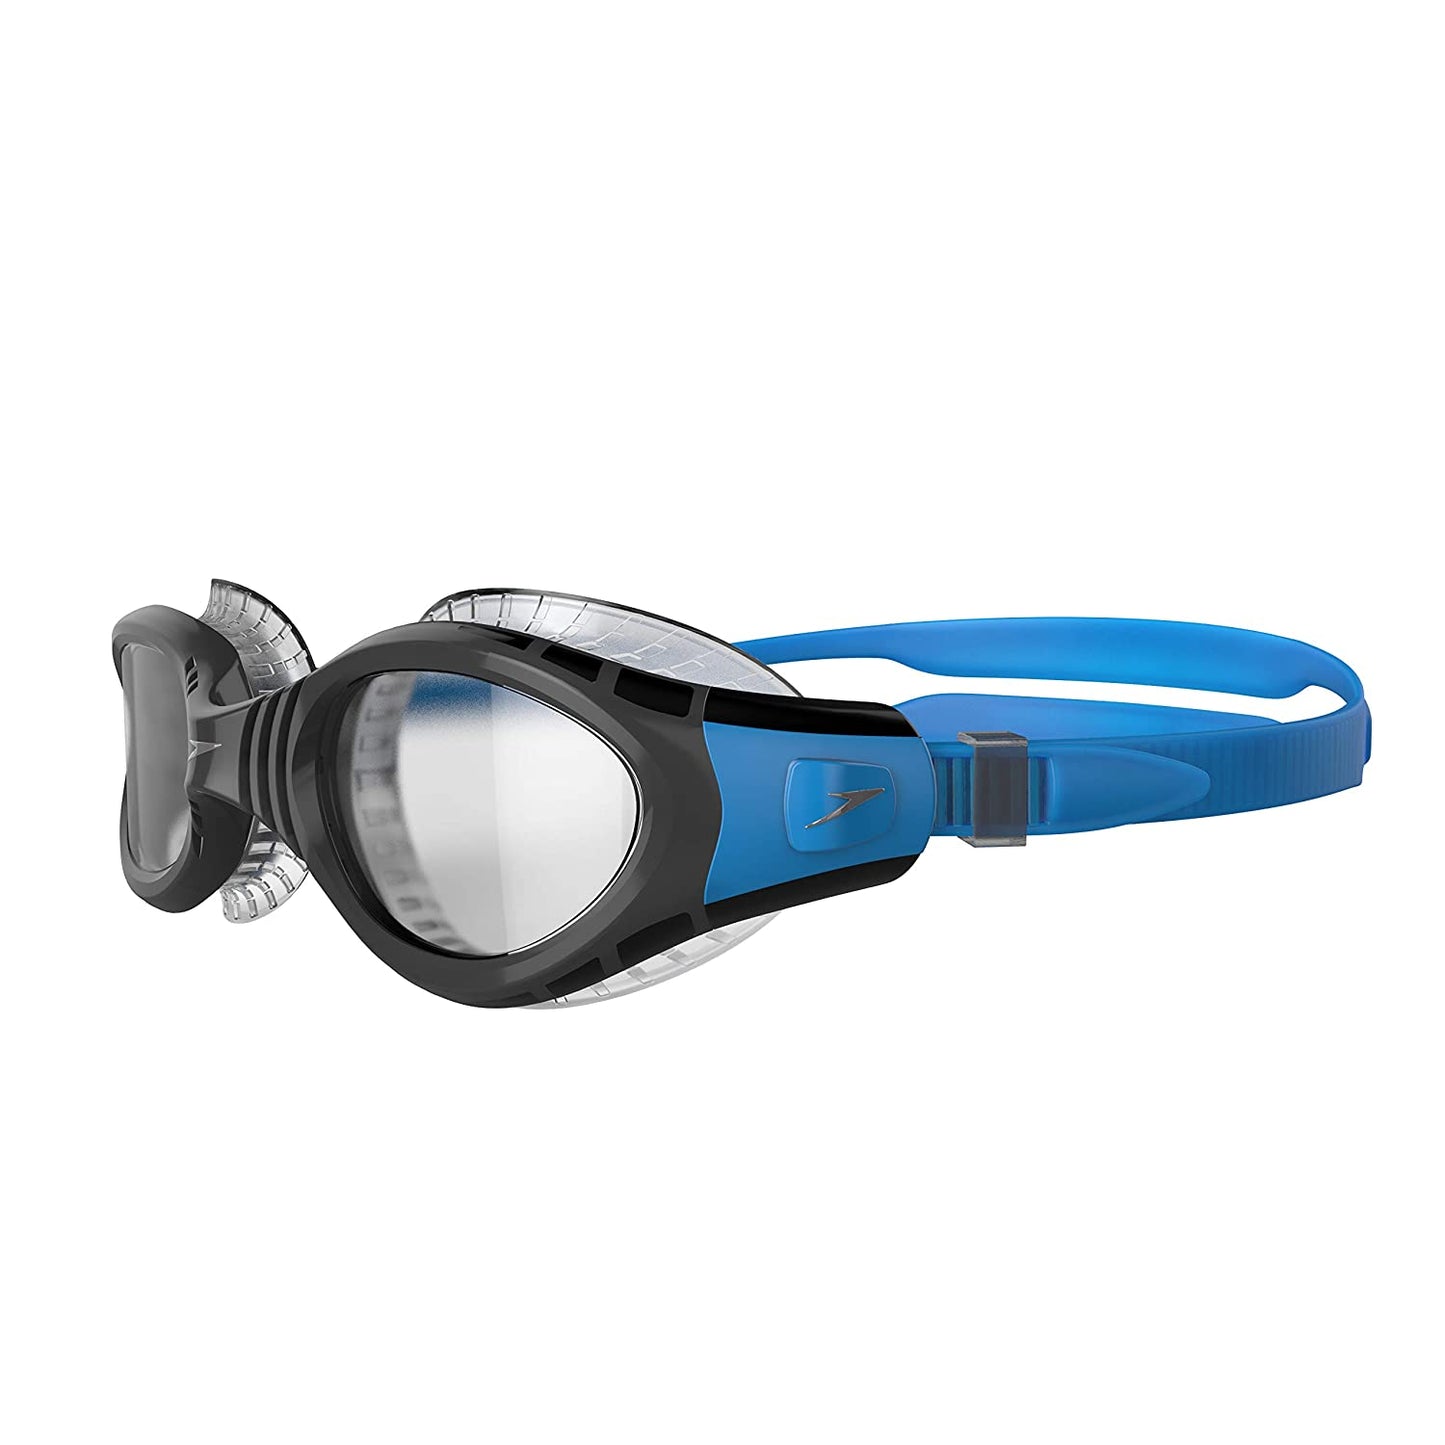 Speedo Futura Biofuse Flexiseal For Unisex-Adult (Size: 1Sz,Color: Blue/Smoke) - Best Price online Prokicksports.com